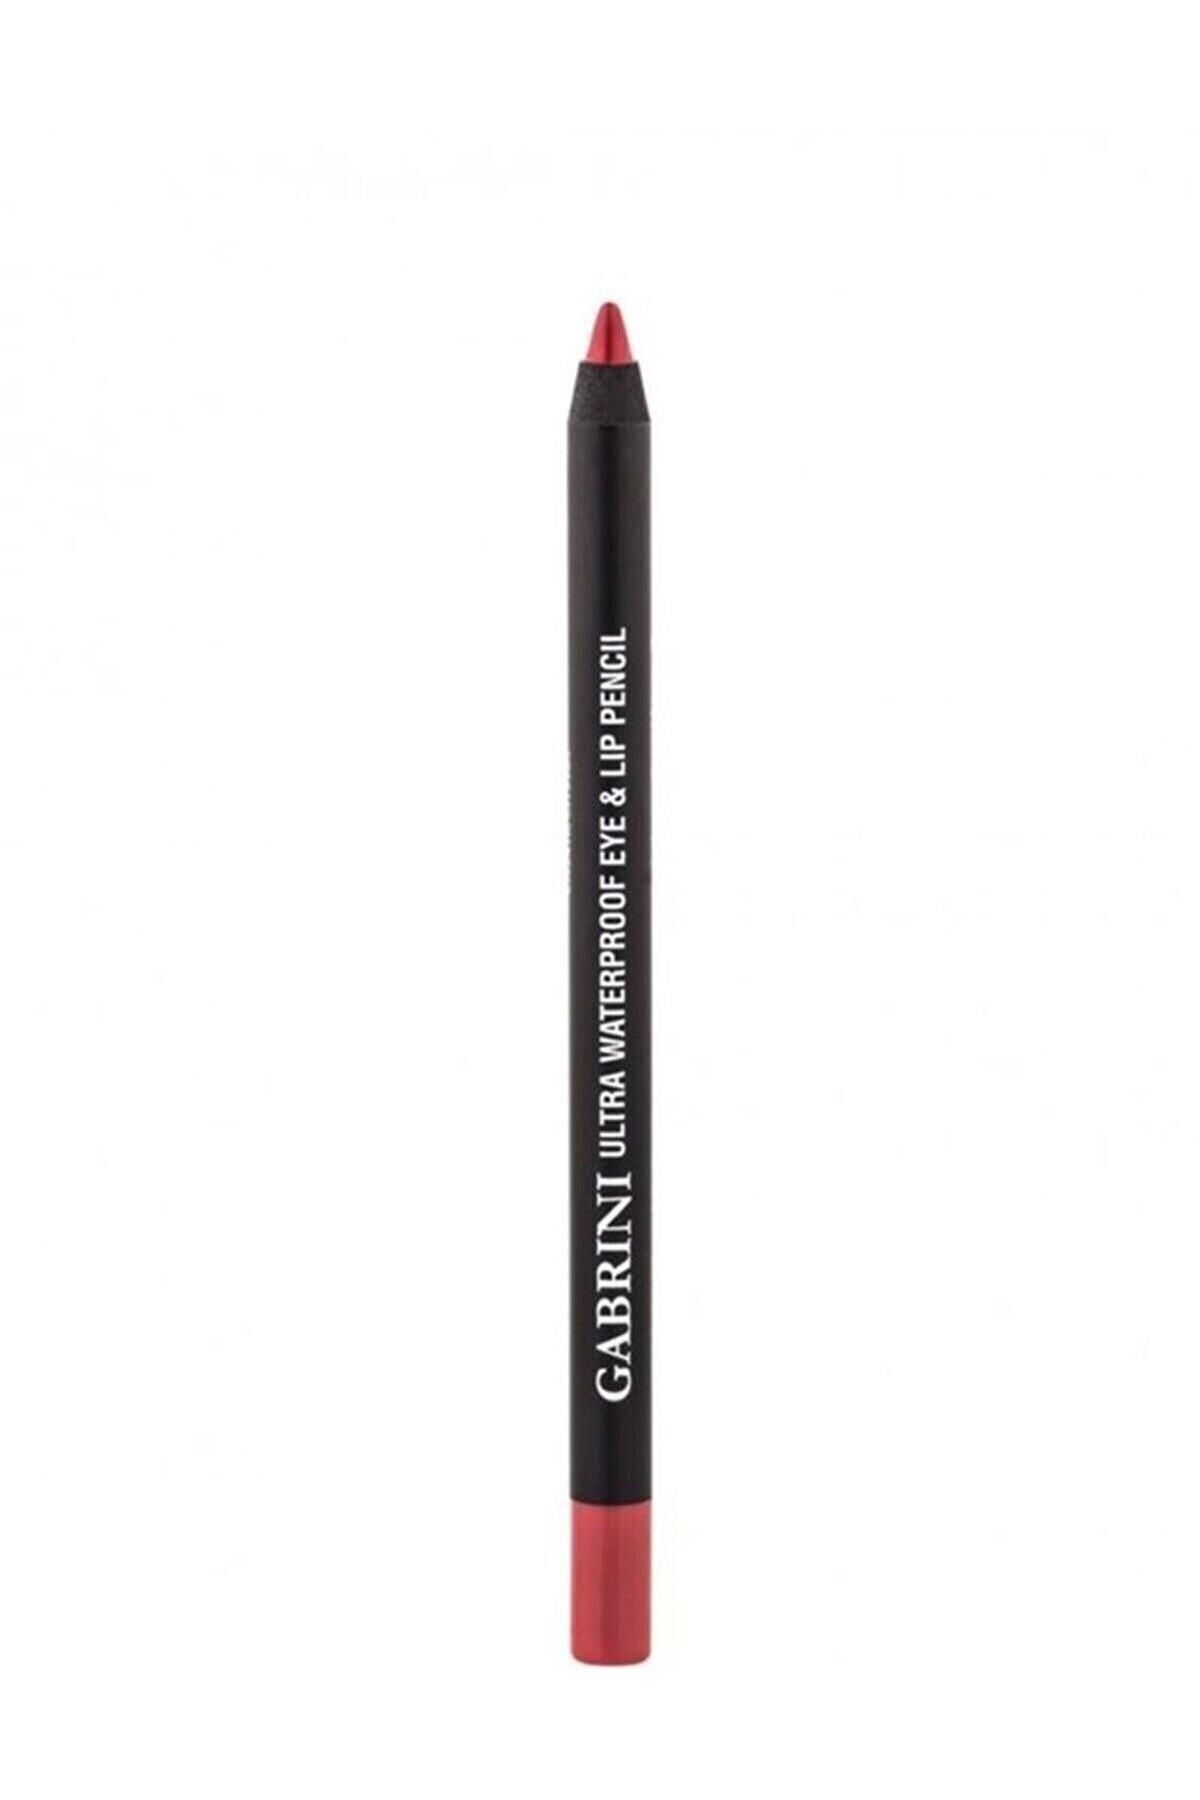 Gabrini Ultra Waterproof Eye & Lip Pencil 19